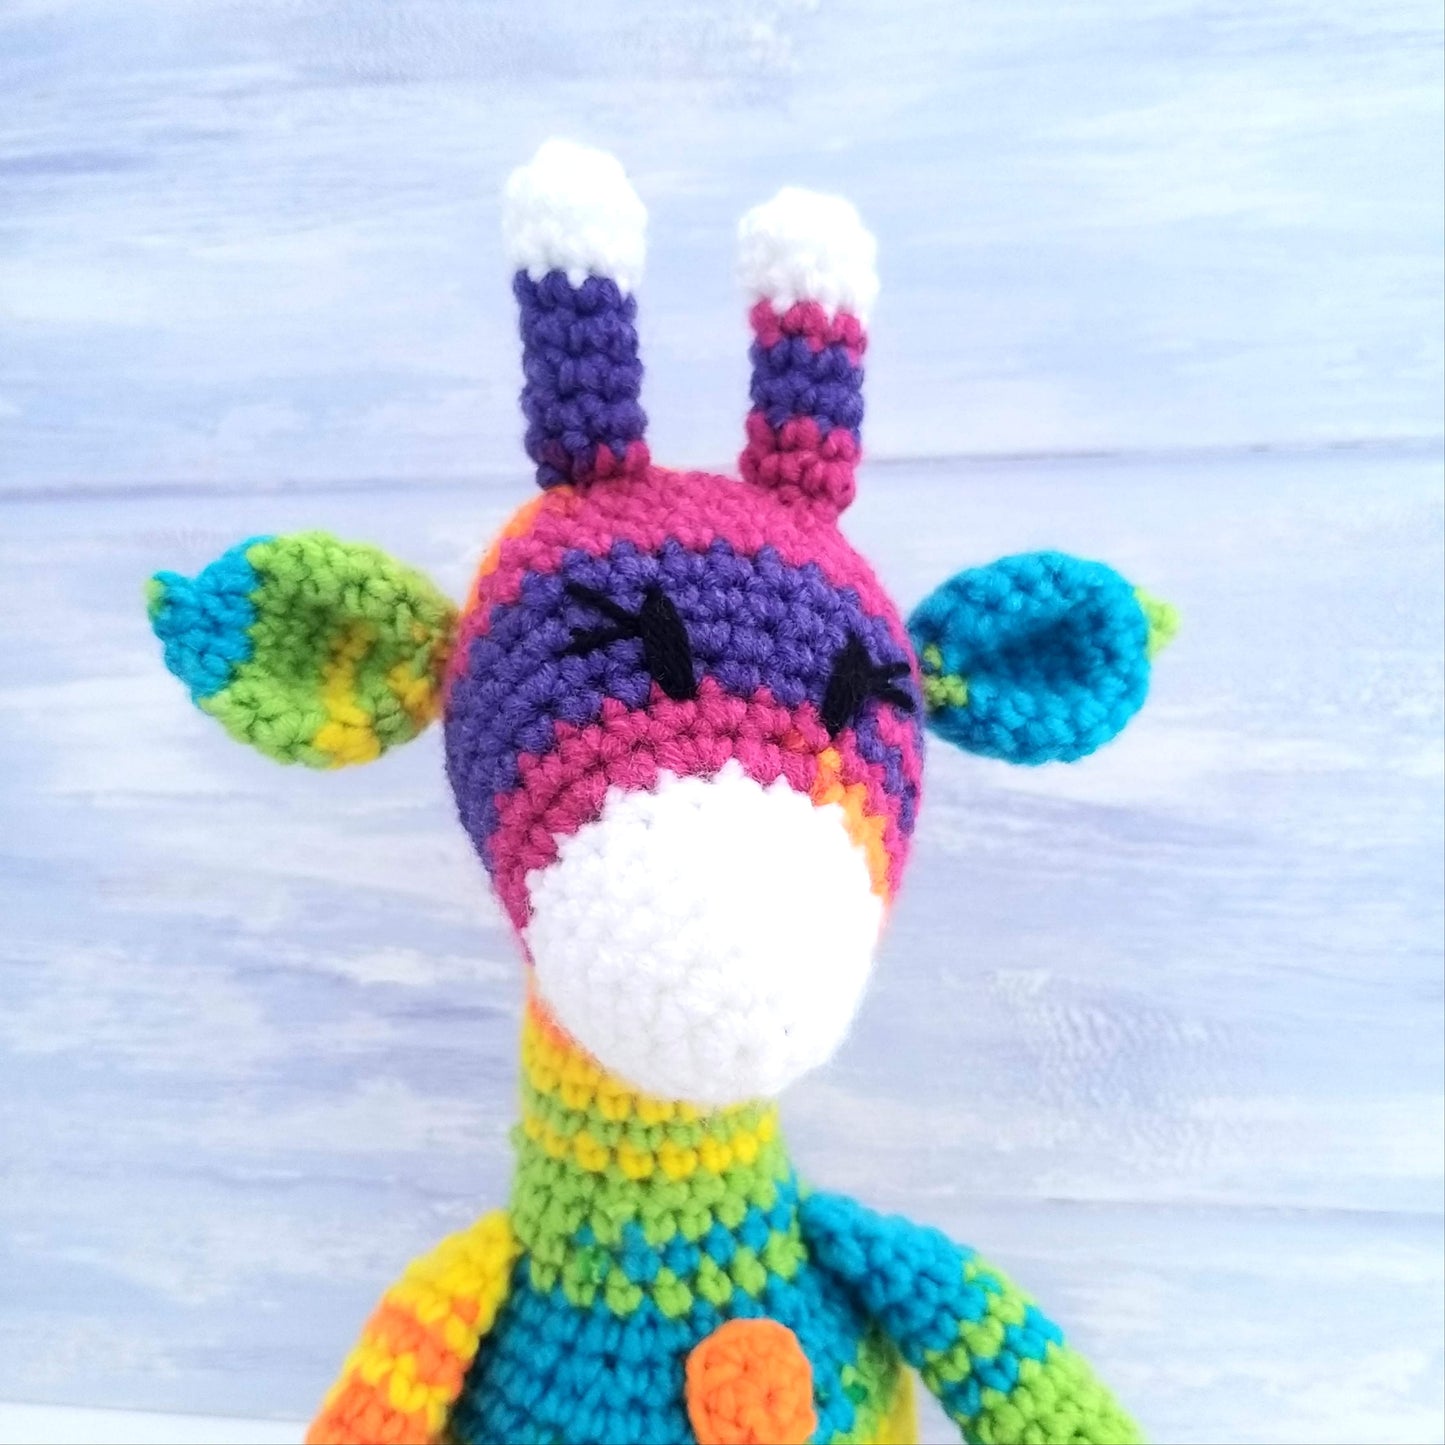 Hand-made Sherbet the Rainbow Giraffe